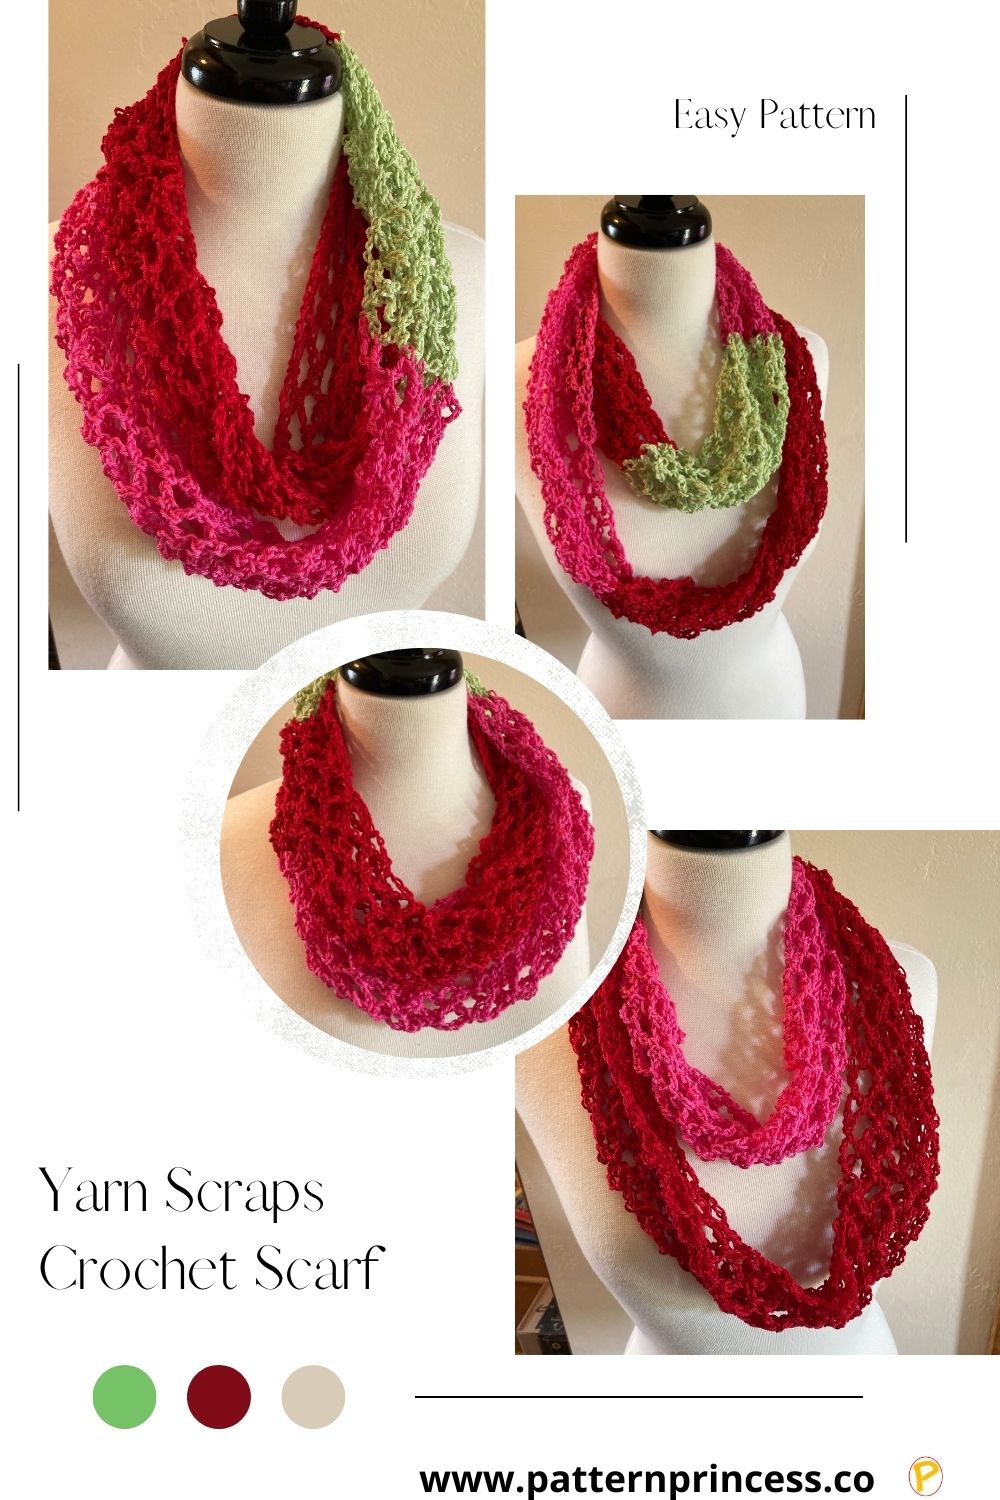 Yarn Scraps Crochet Scarf